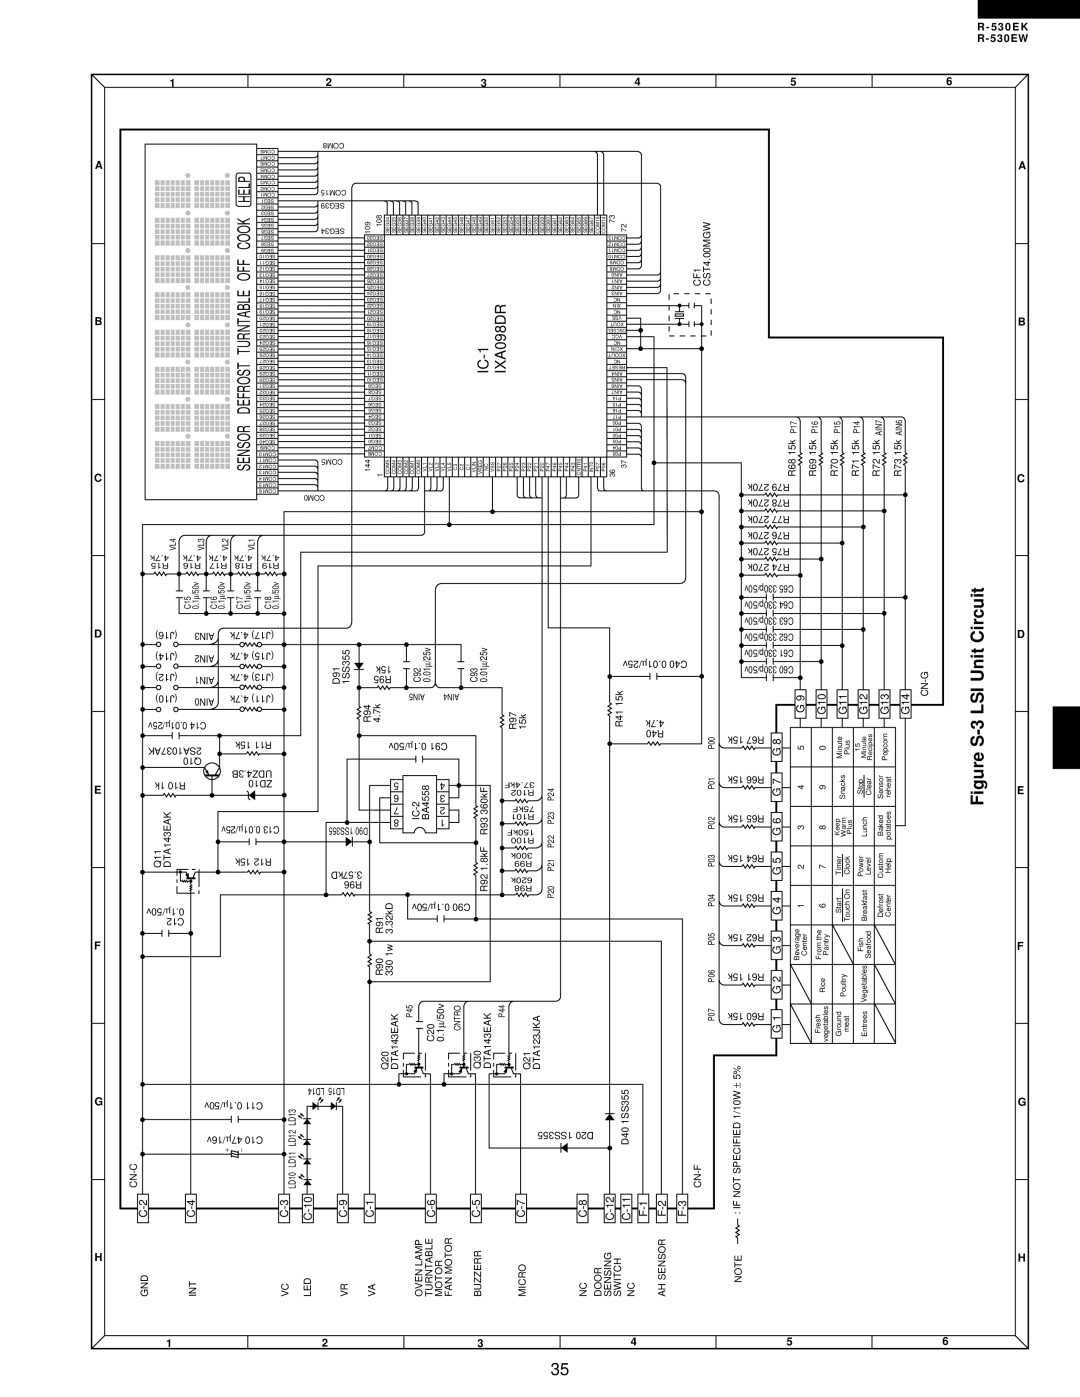 Sharp R-530EK service manual Circuit, LSI Unit, IXA098DR, IC-1, FigureS, R - 530EW 